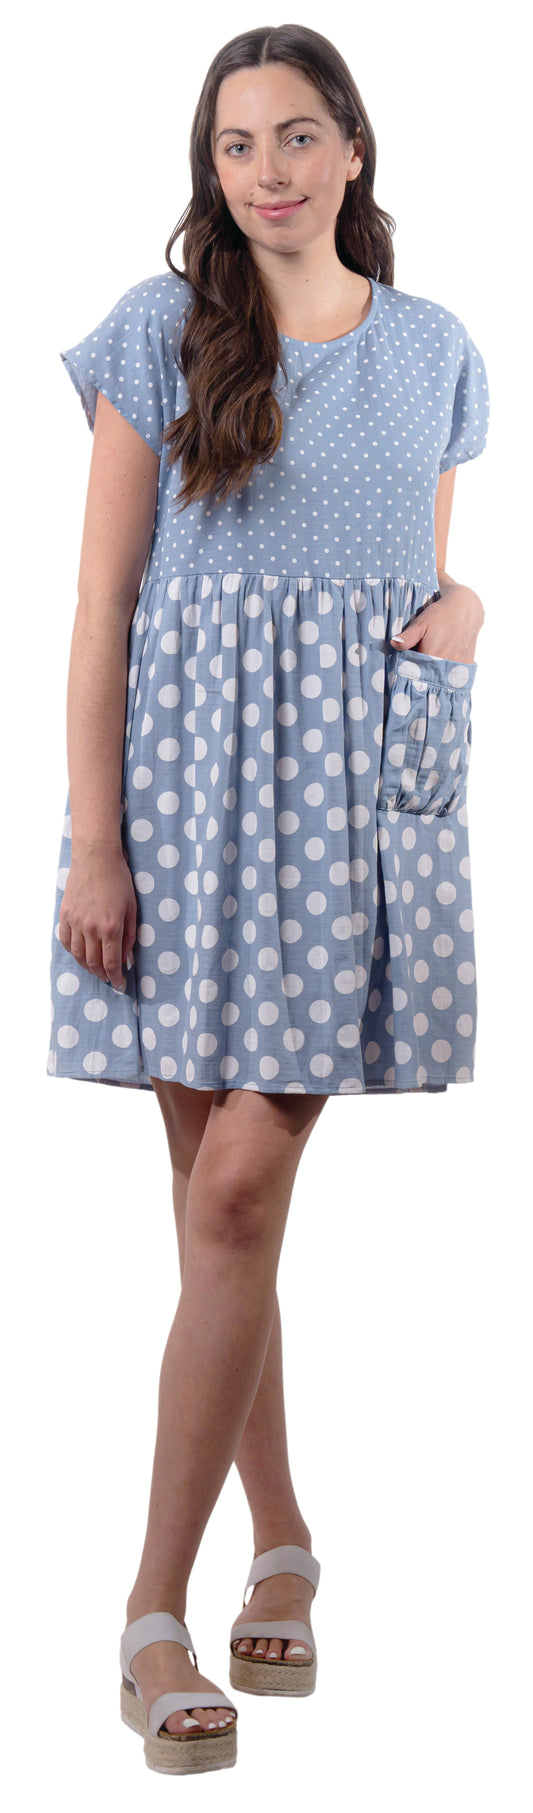 Spring Dresses Online: Plus Size, Petite Designer Women's Dress in